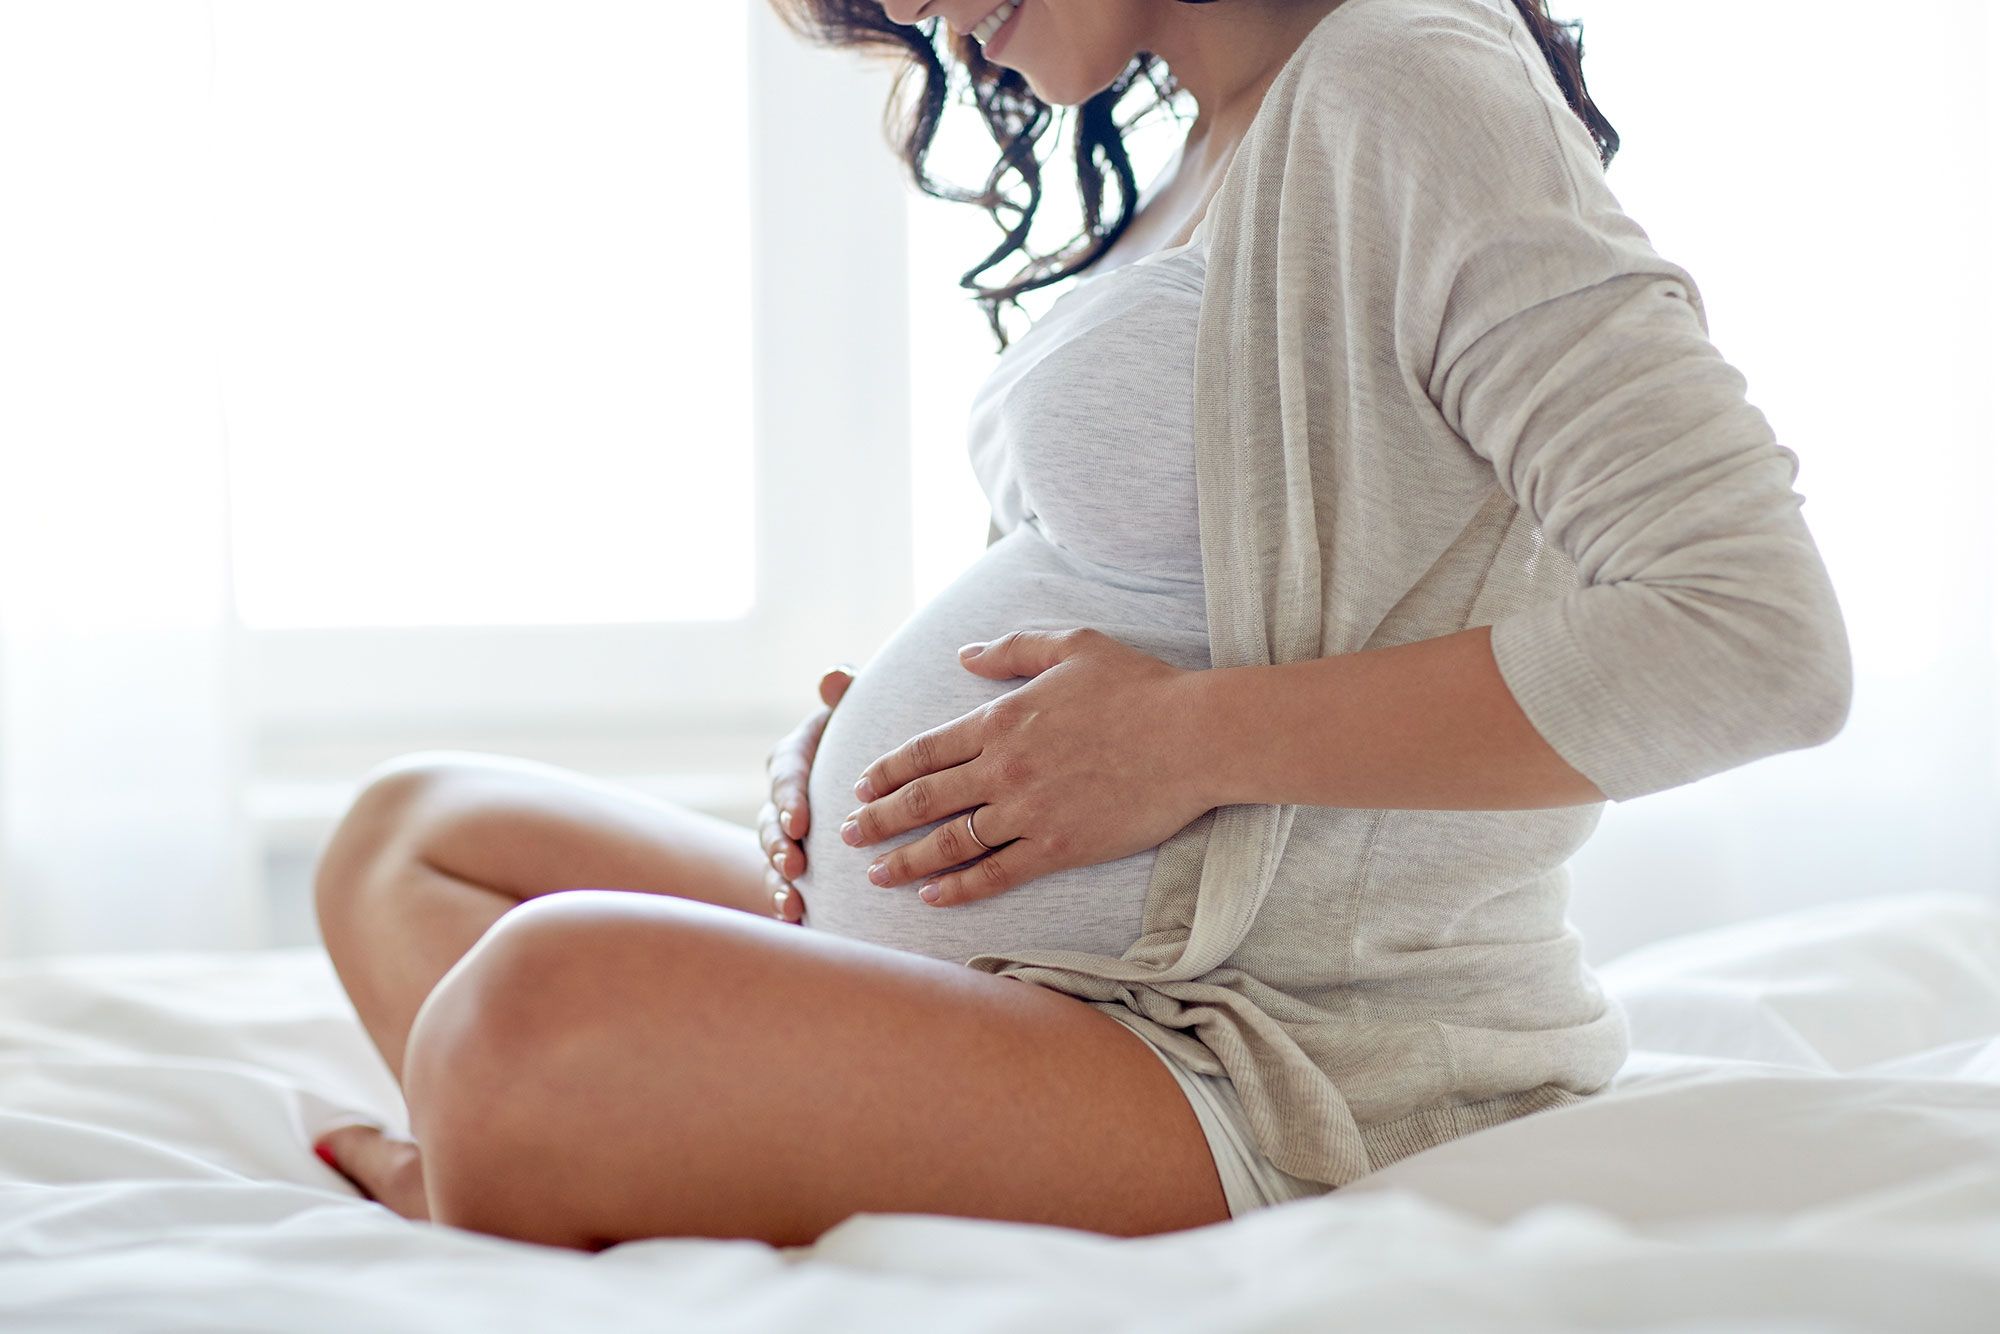 Chirurgie Mammaire et grossesse : quand programmer l’intervention ? | Dr Sarfati